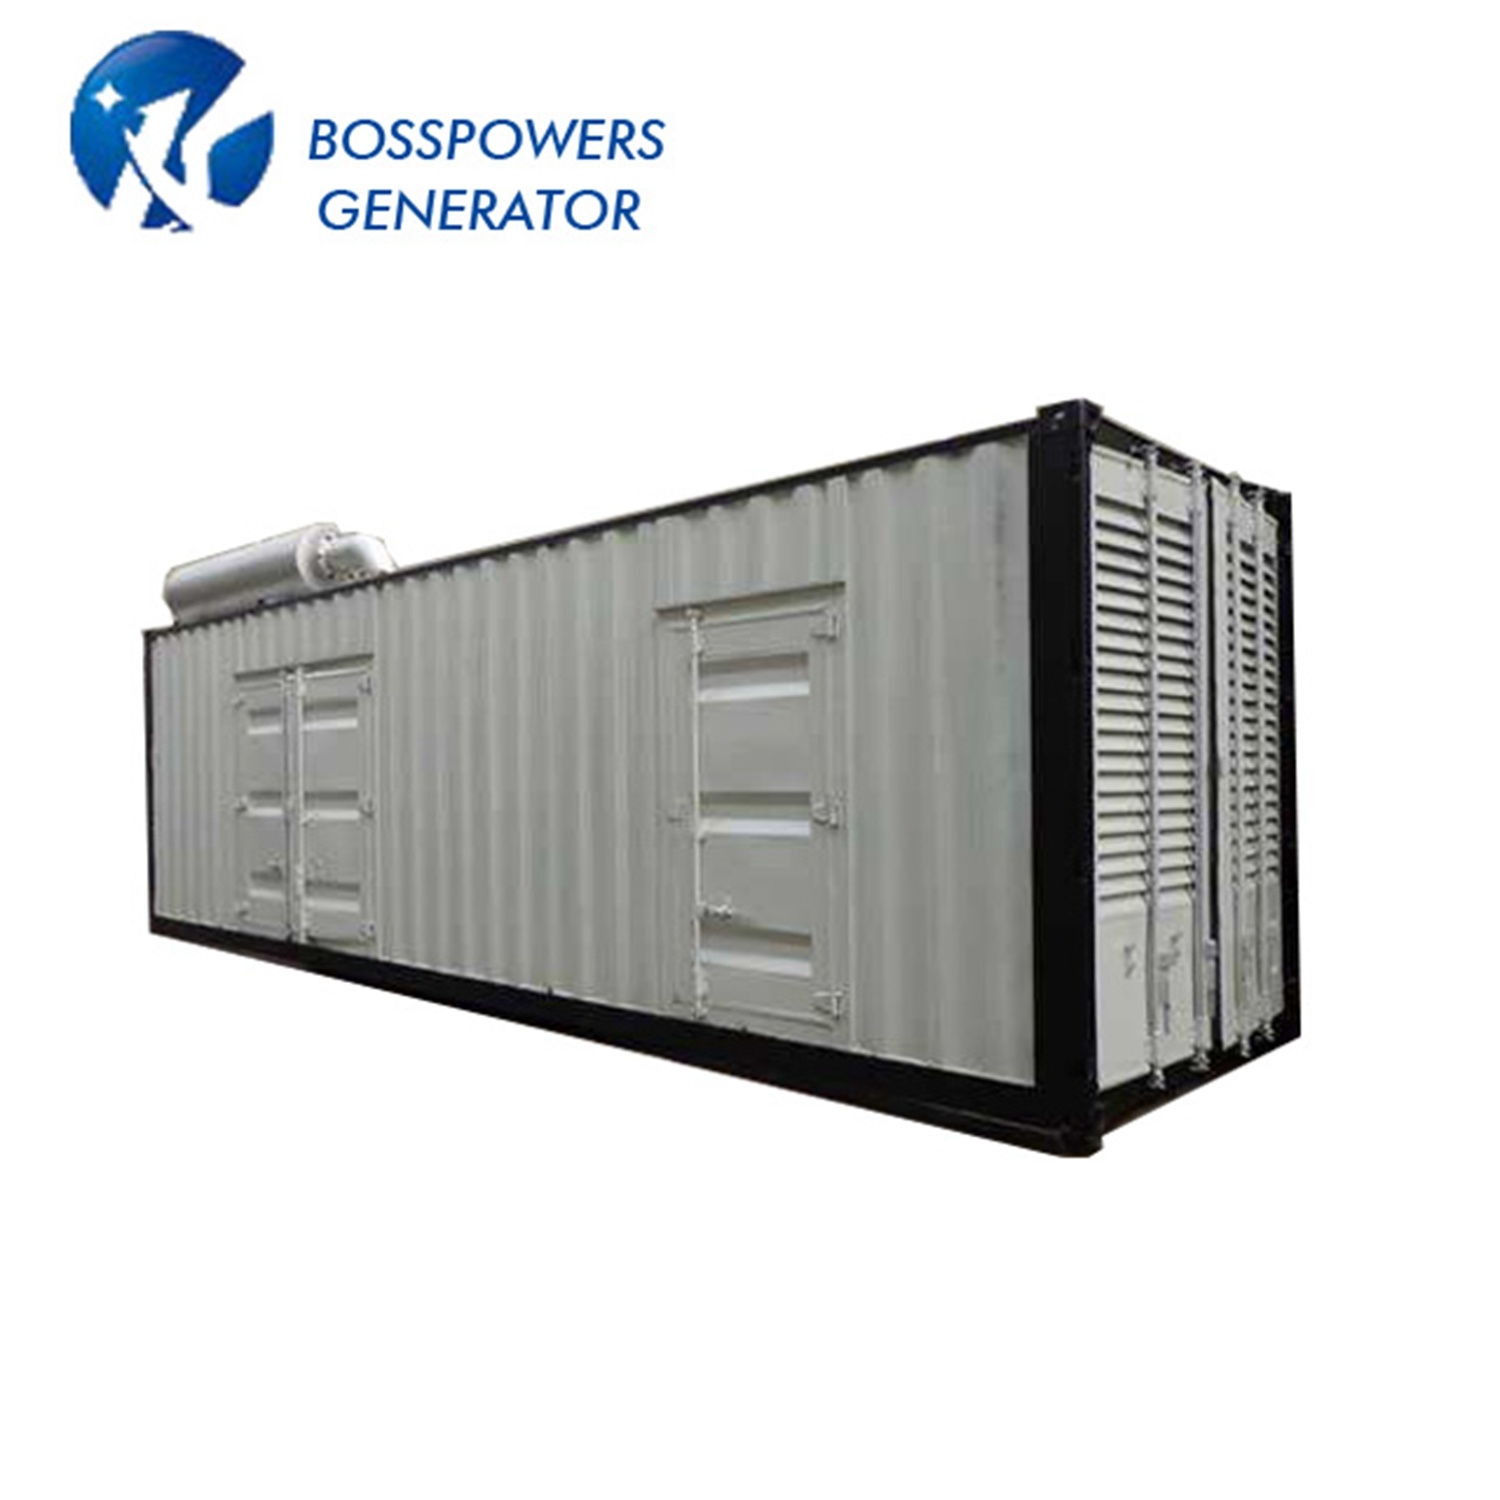 Standby Power 1350kw Yuchai Weatherproof Containerized Power Diesel Generator Set